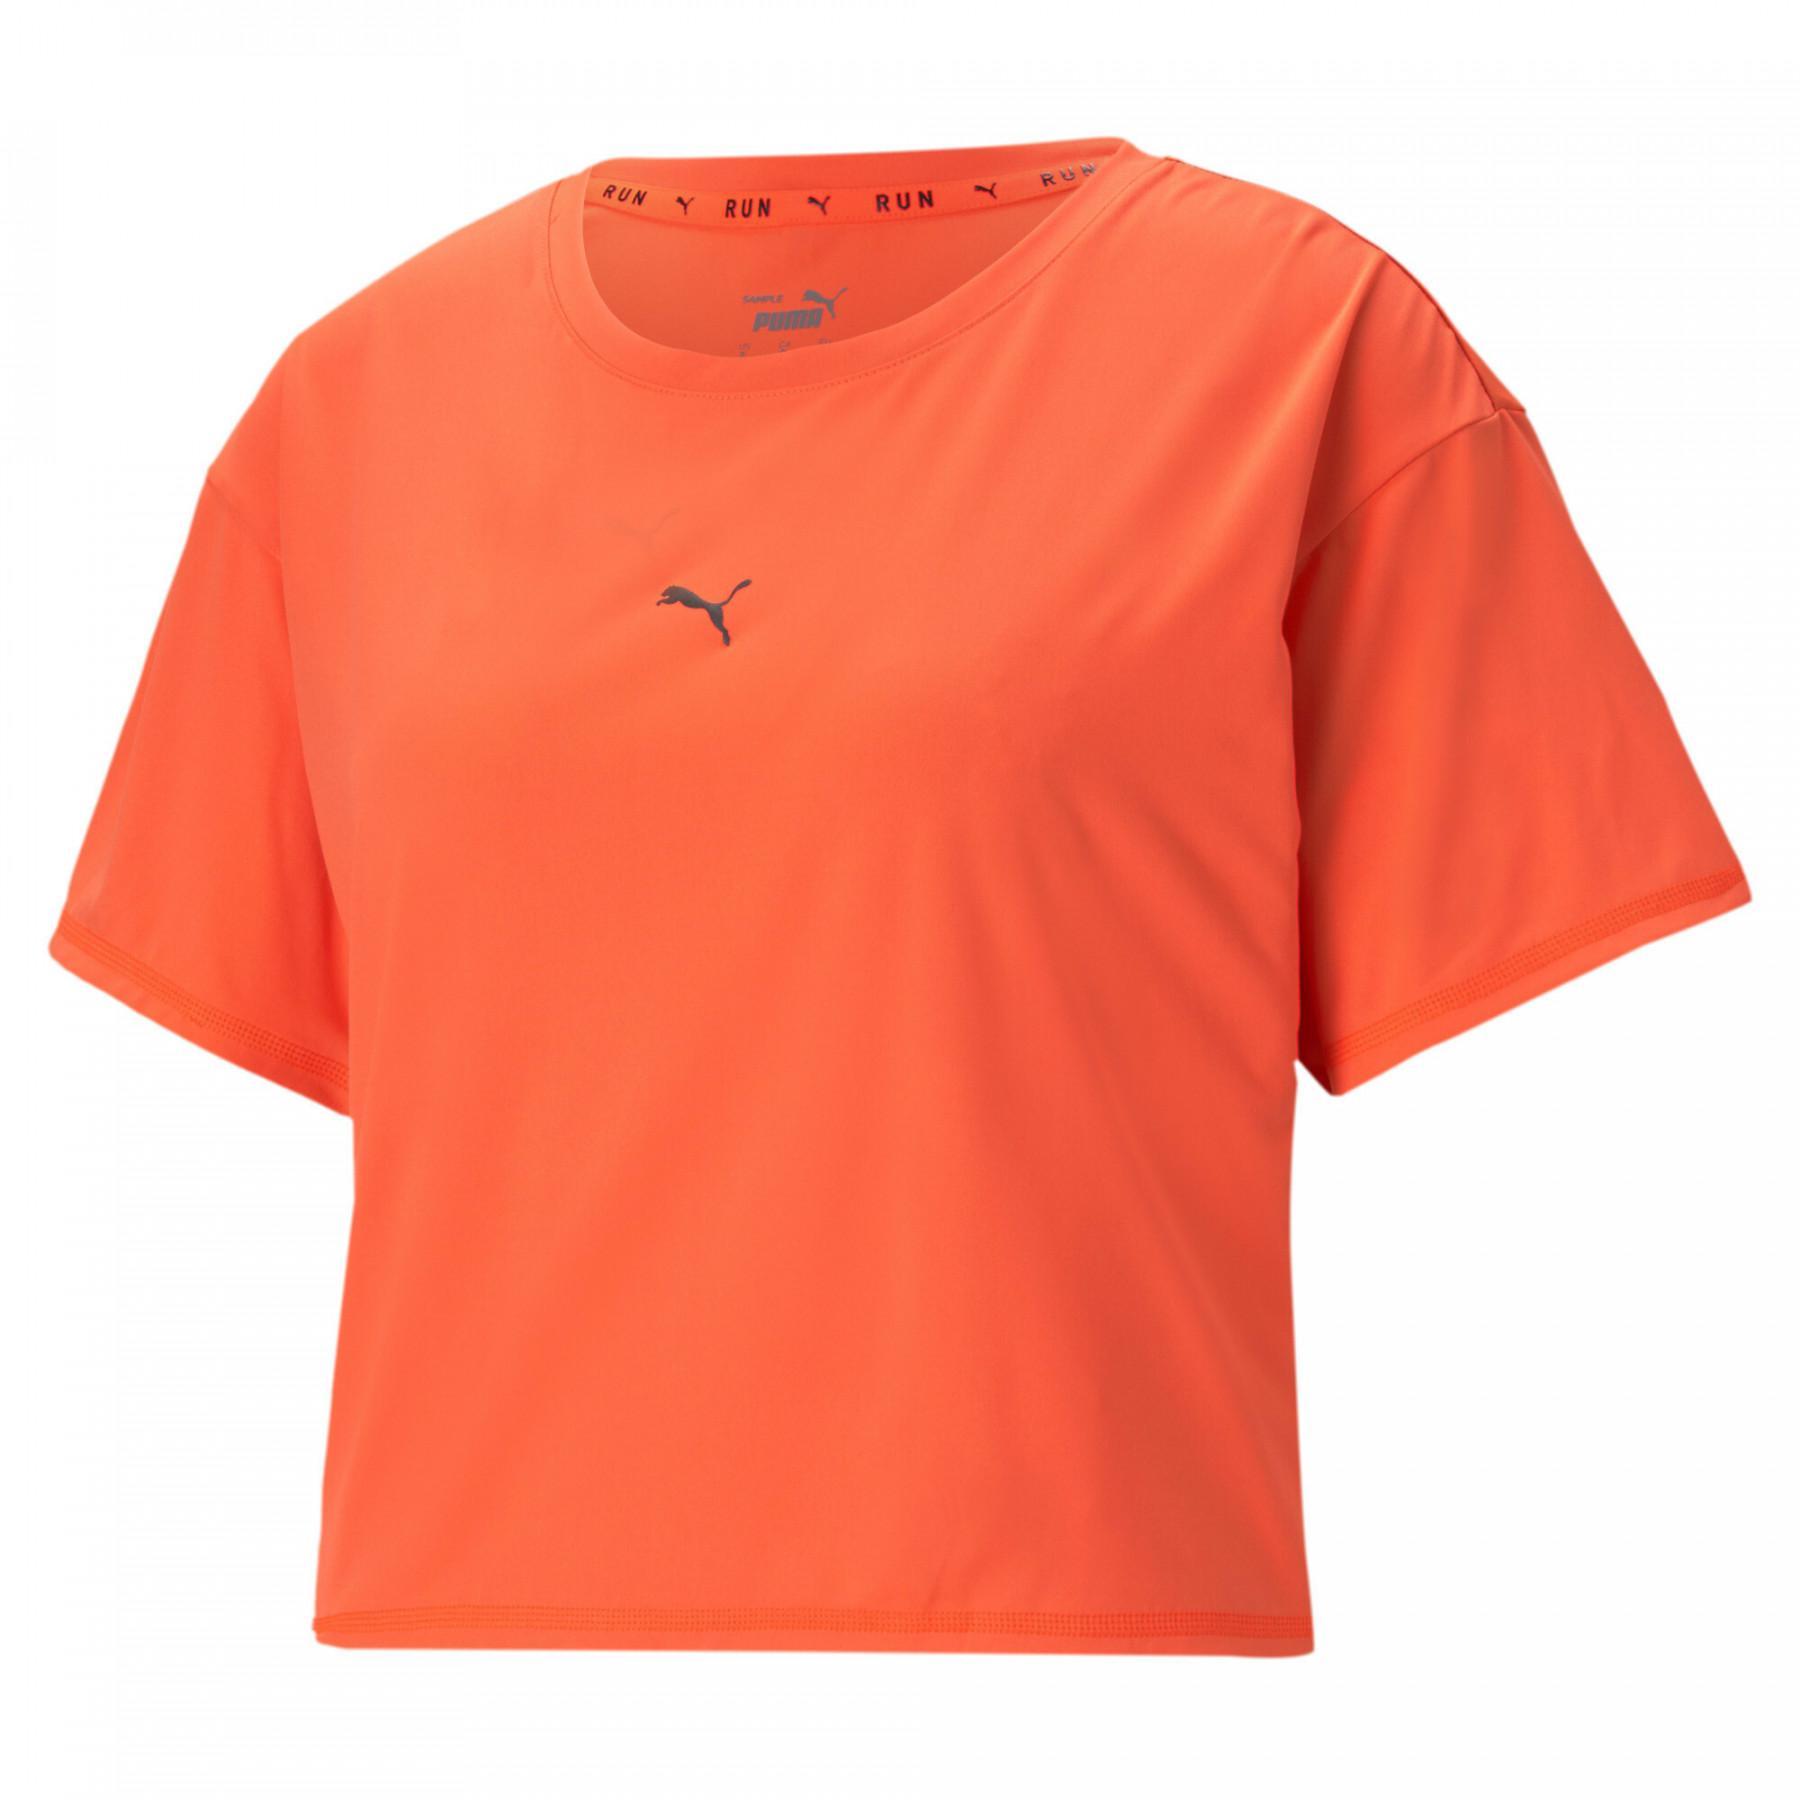 Adapt T-shirts Launch T-shirt - Cool Handball polos and wear Woman\'s Run Textile - - Puma